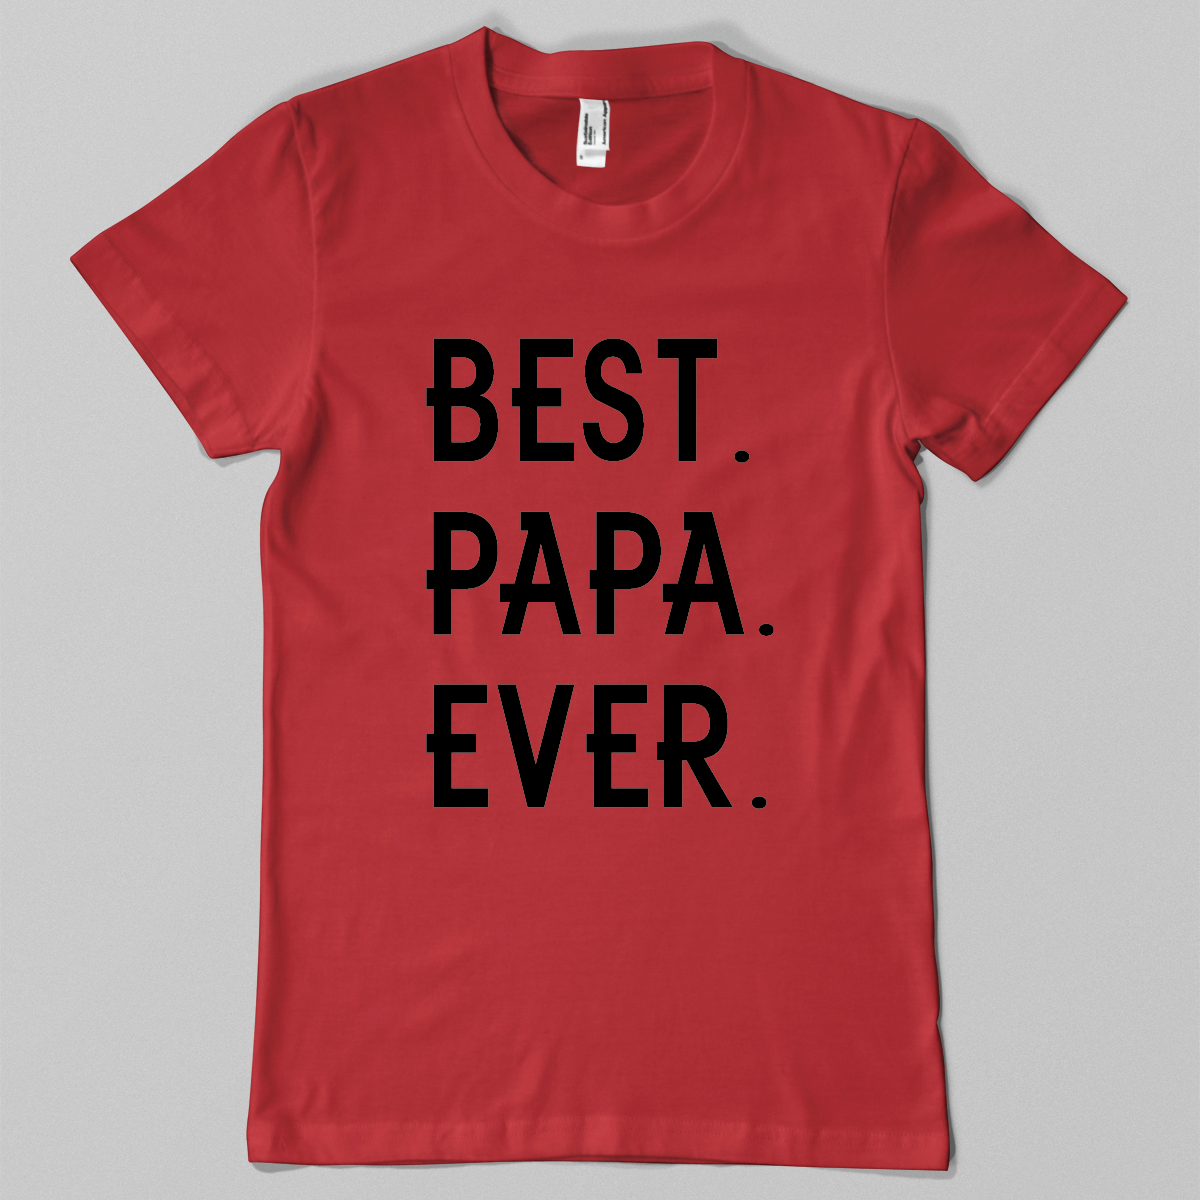 Best. Papa. Ever.